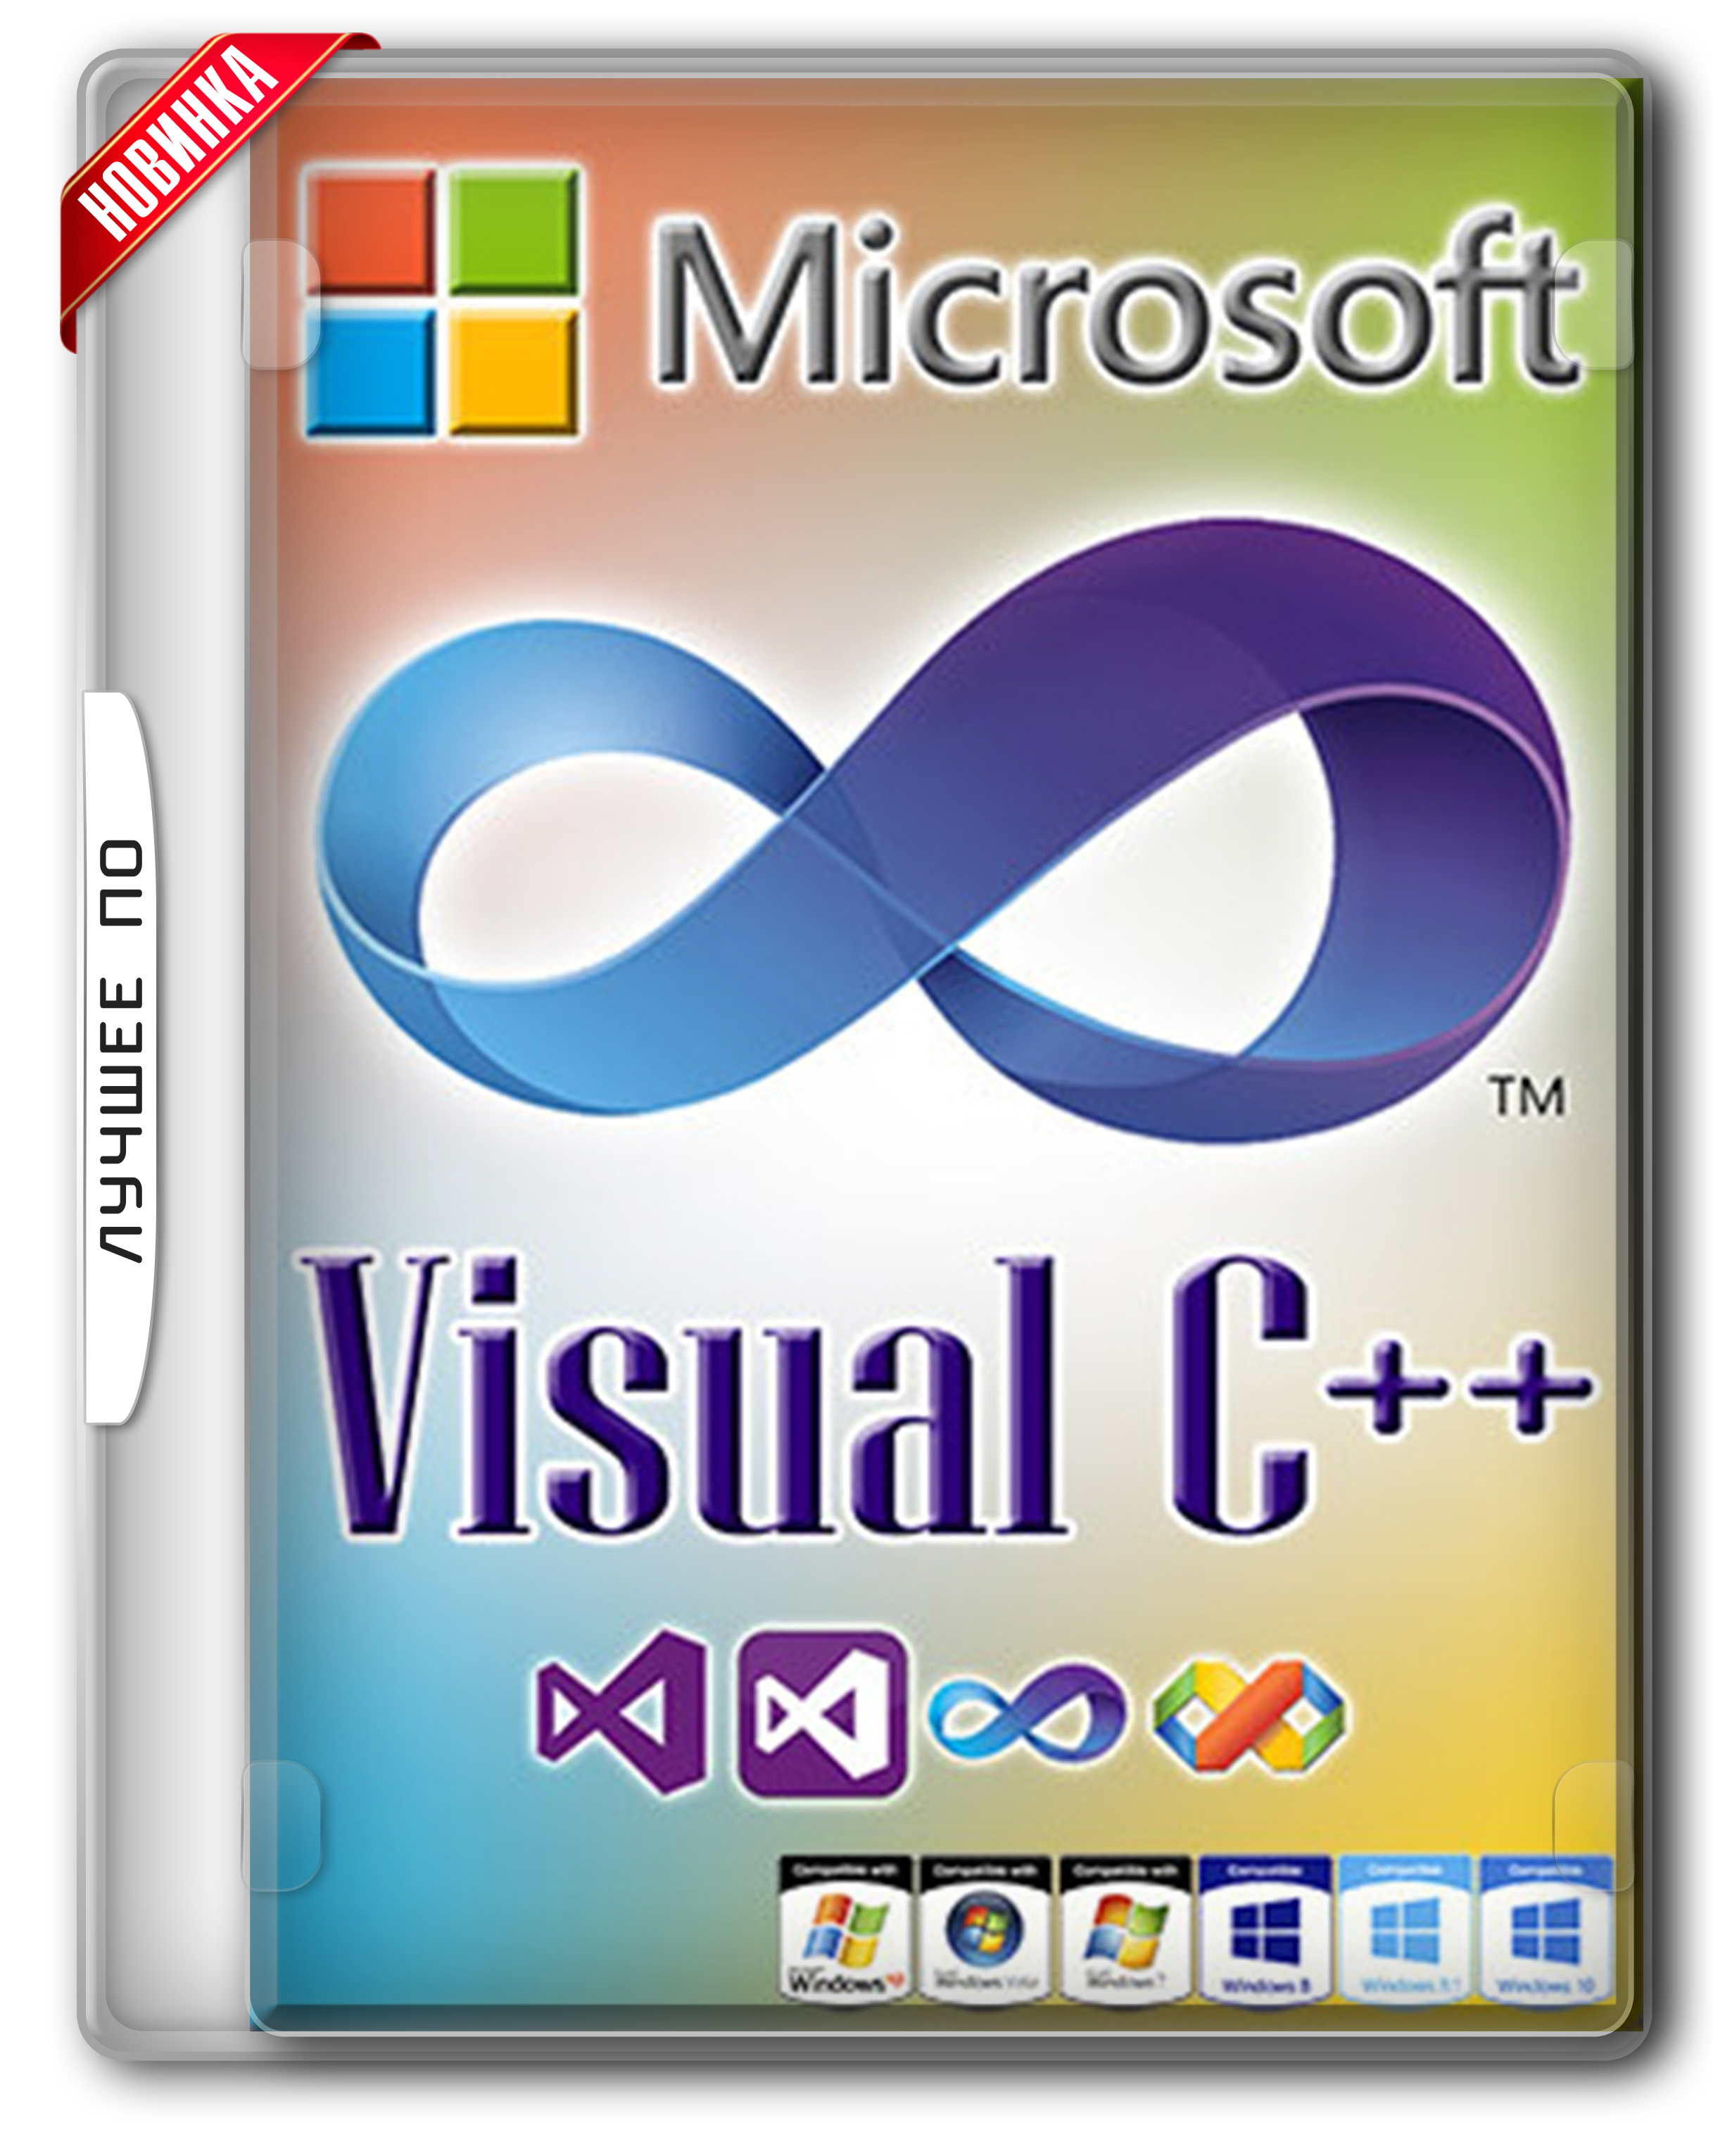 Microsoft visual c service pack. Microsoft Visual c++. Microsoft Visual c++ Redistributable. Microsoft Visual c++ 2005. Microsoft Visual c++ Redistributable 2019.